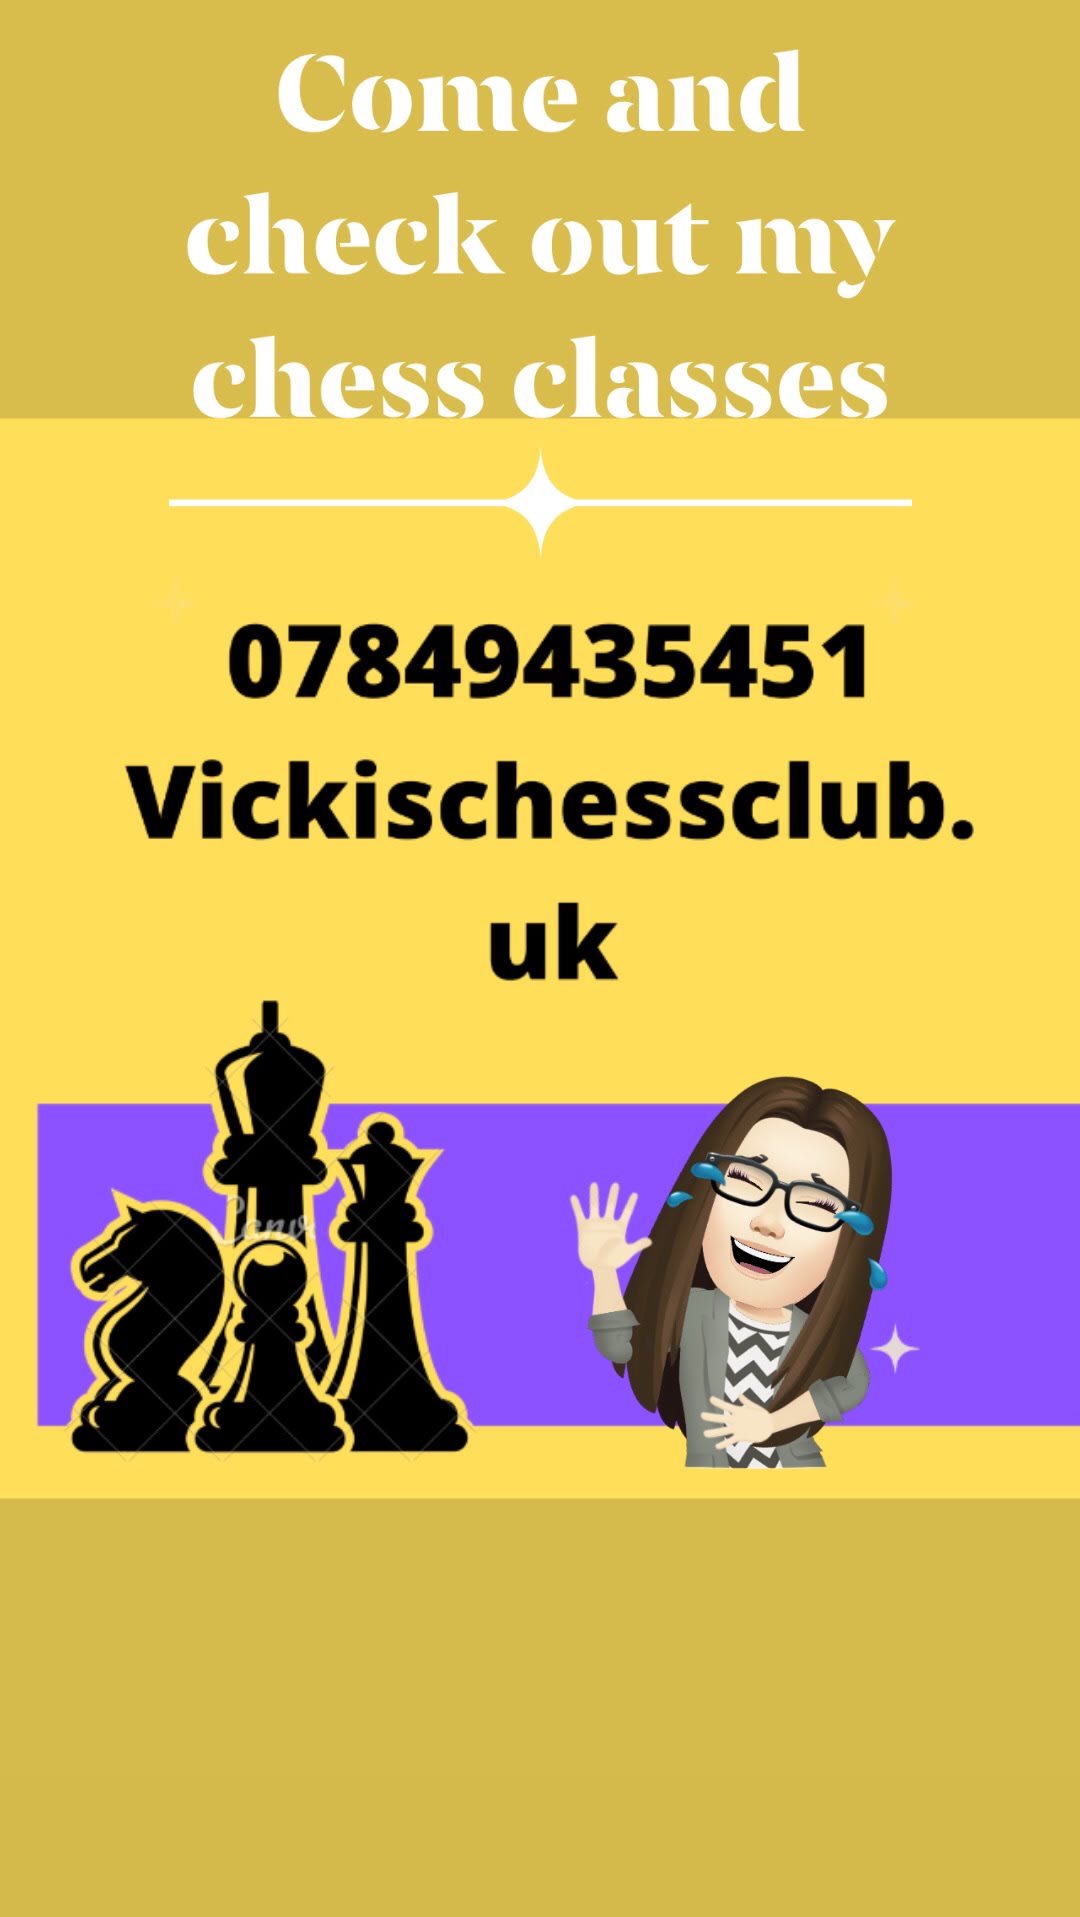 Images Vicki's Chess Club